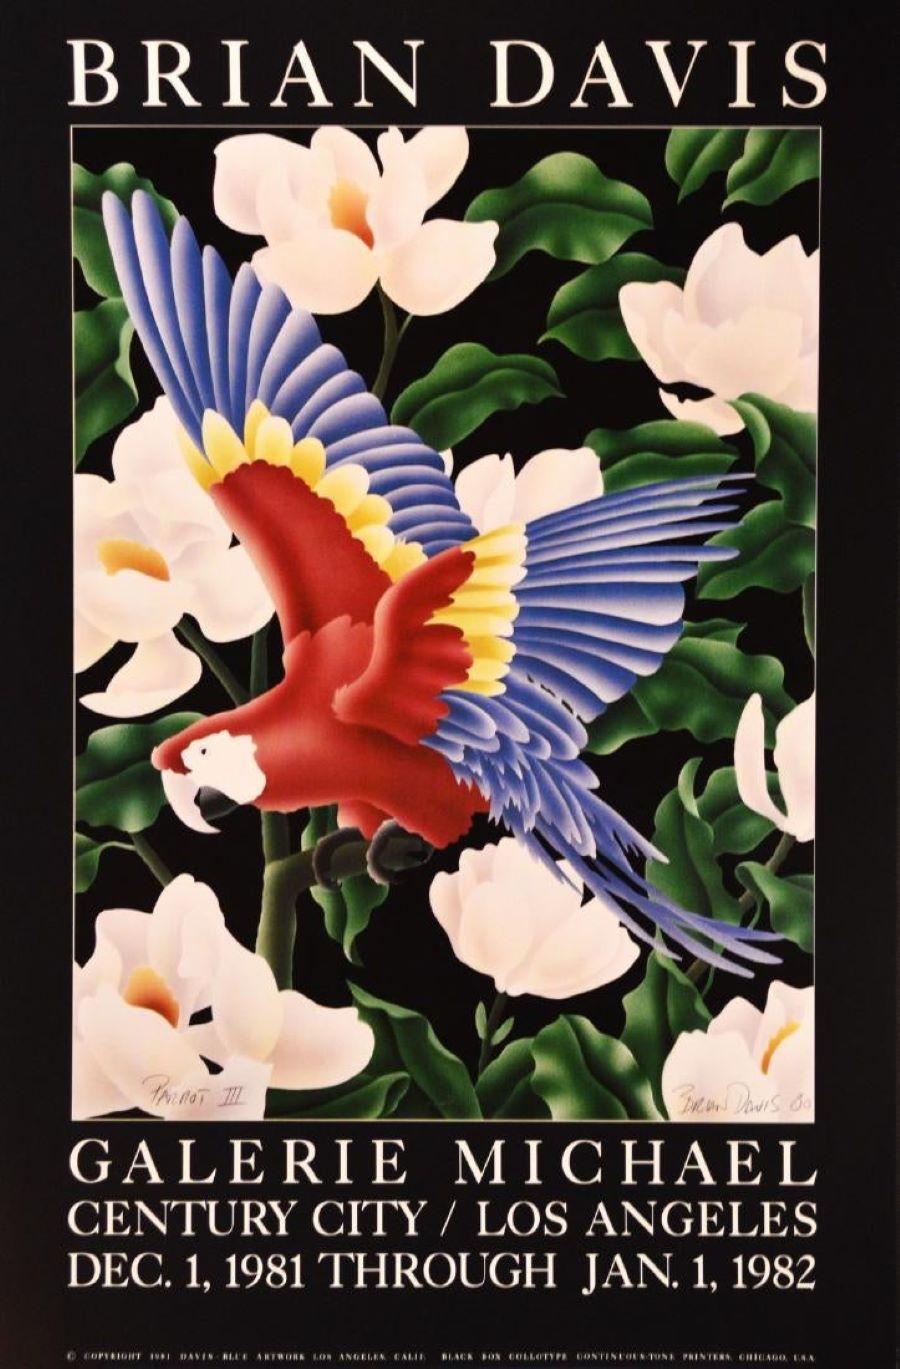 BRIAN DAVIS Animal Print - “Parrot III”-Galerie Michael, Century City/Los Angeles